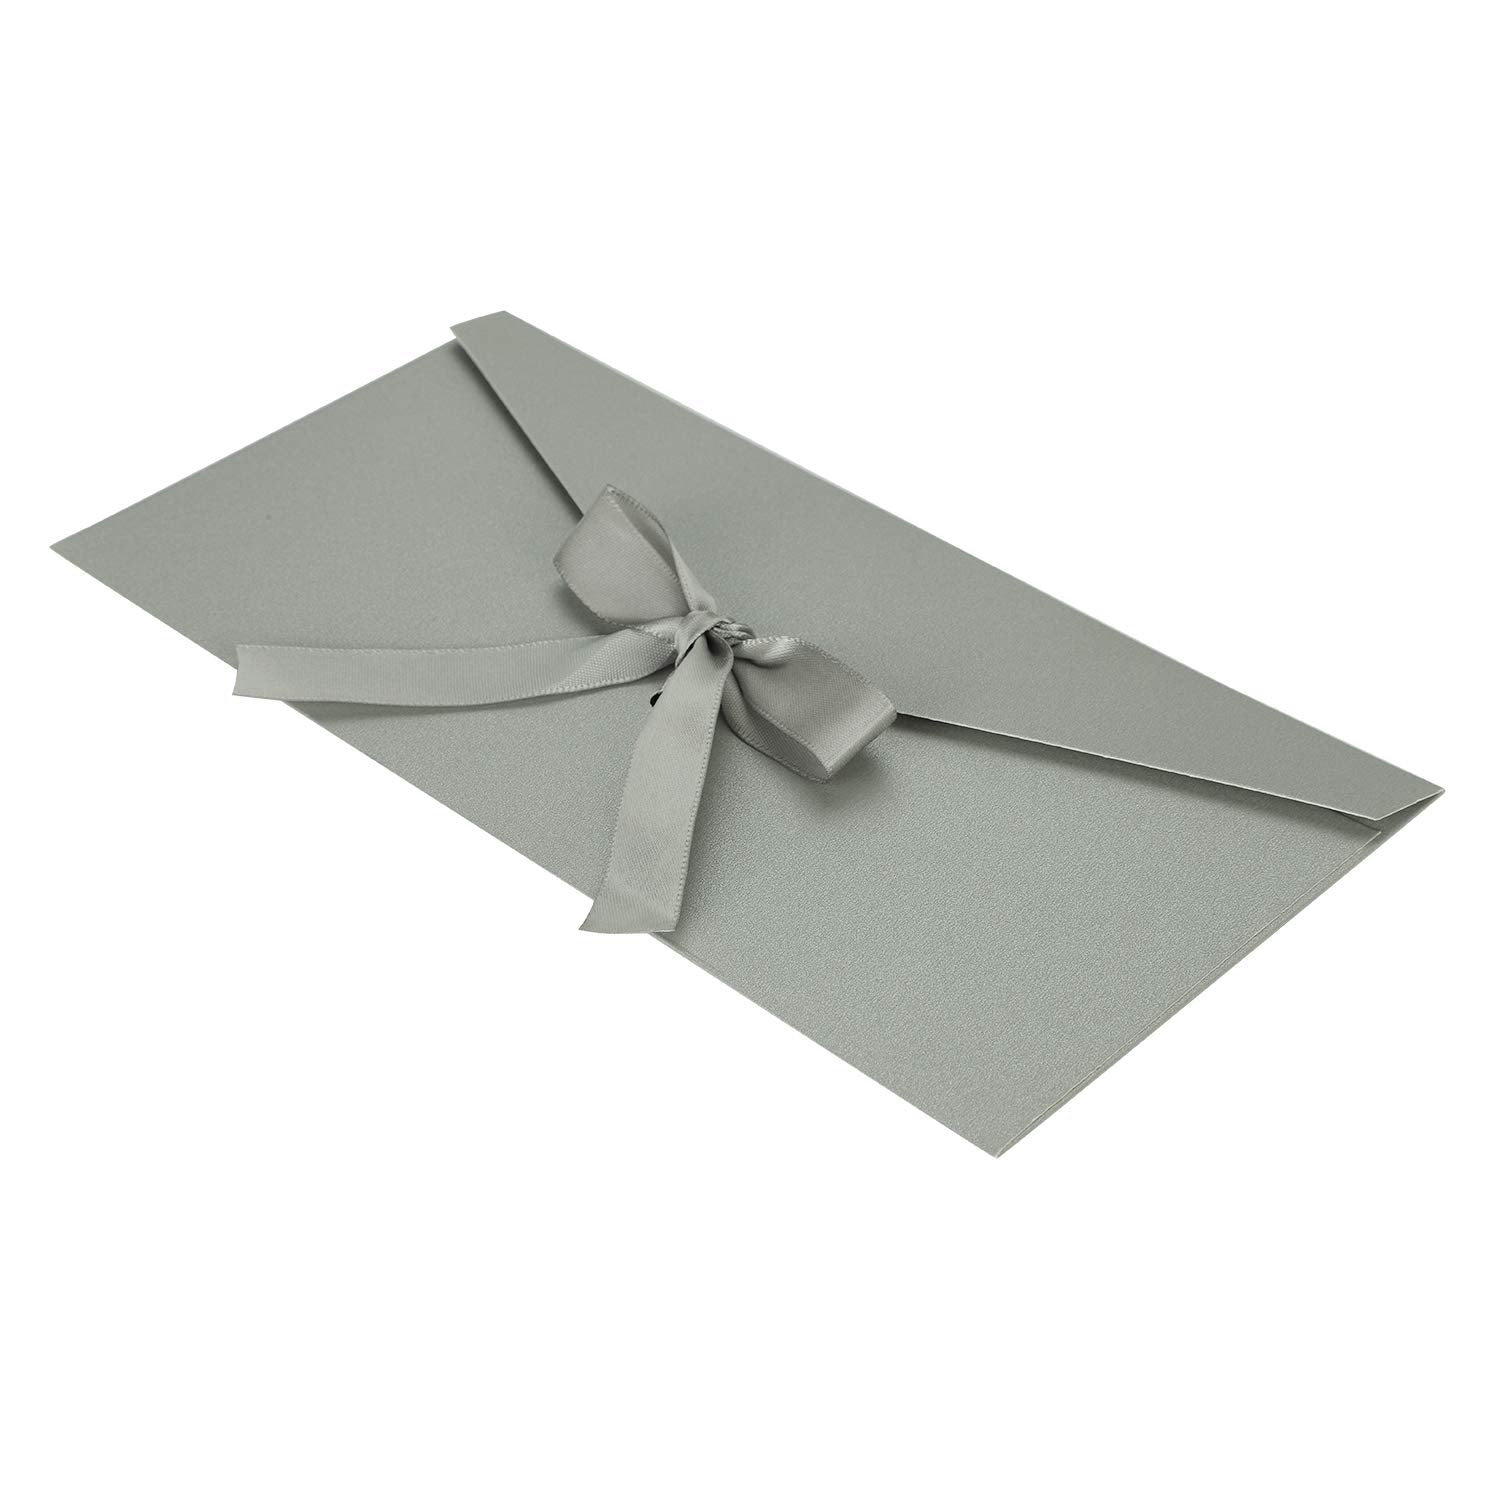 10PCS Gift Card Envelopes Birthday Card Envelopes Wedding Invitation Envelopes Pearlescent Paper Envelopes Cute Mini Envelopes with Ribbon for Handmade Invitations Letters or Festival Cards